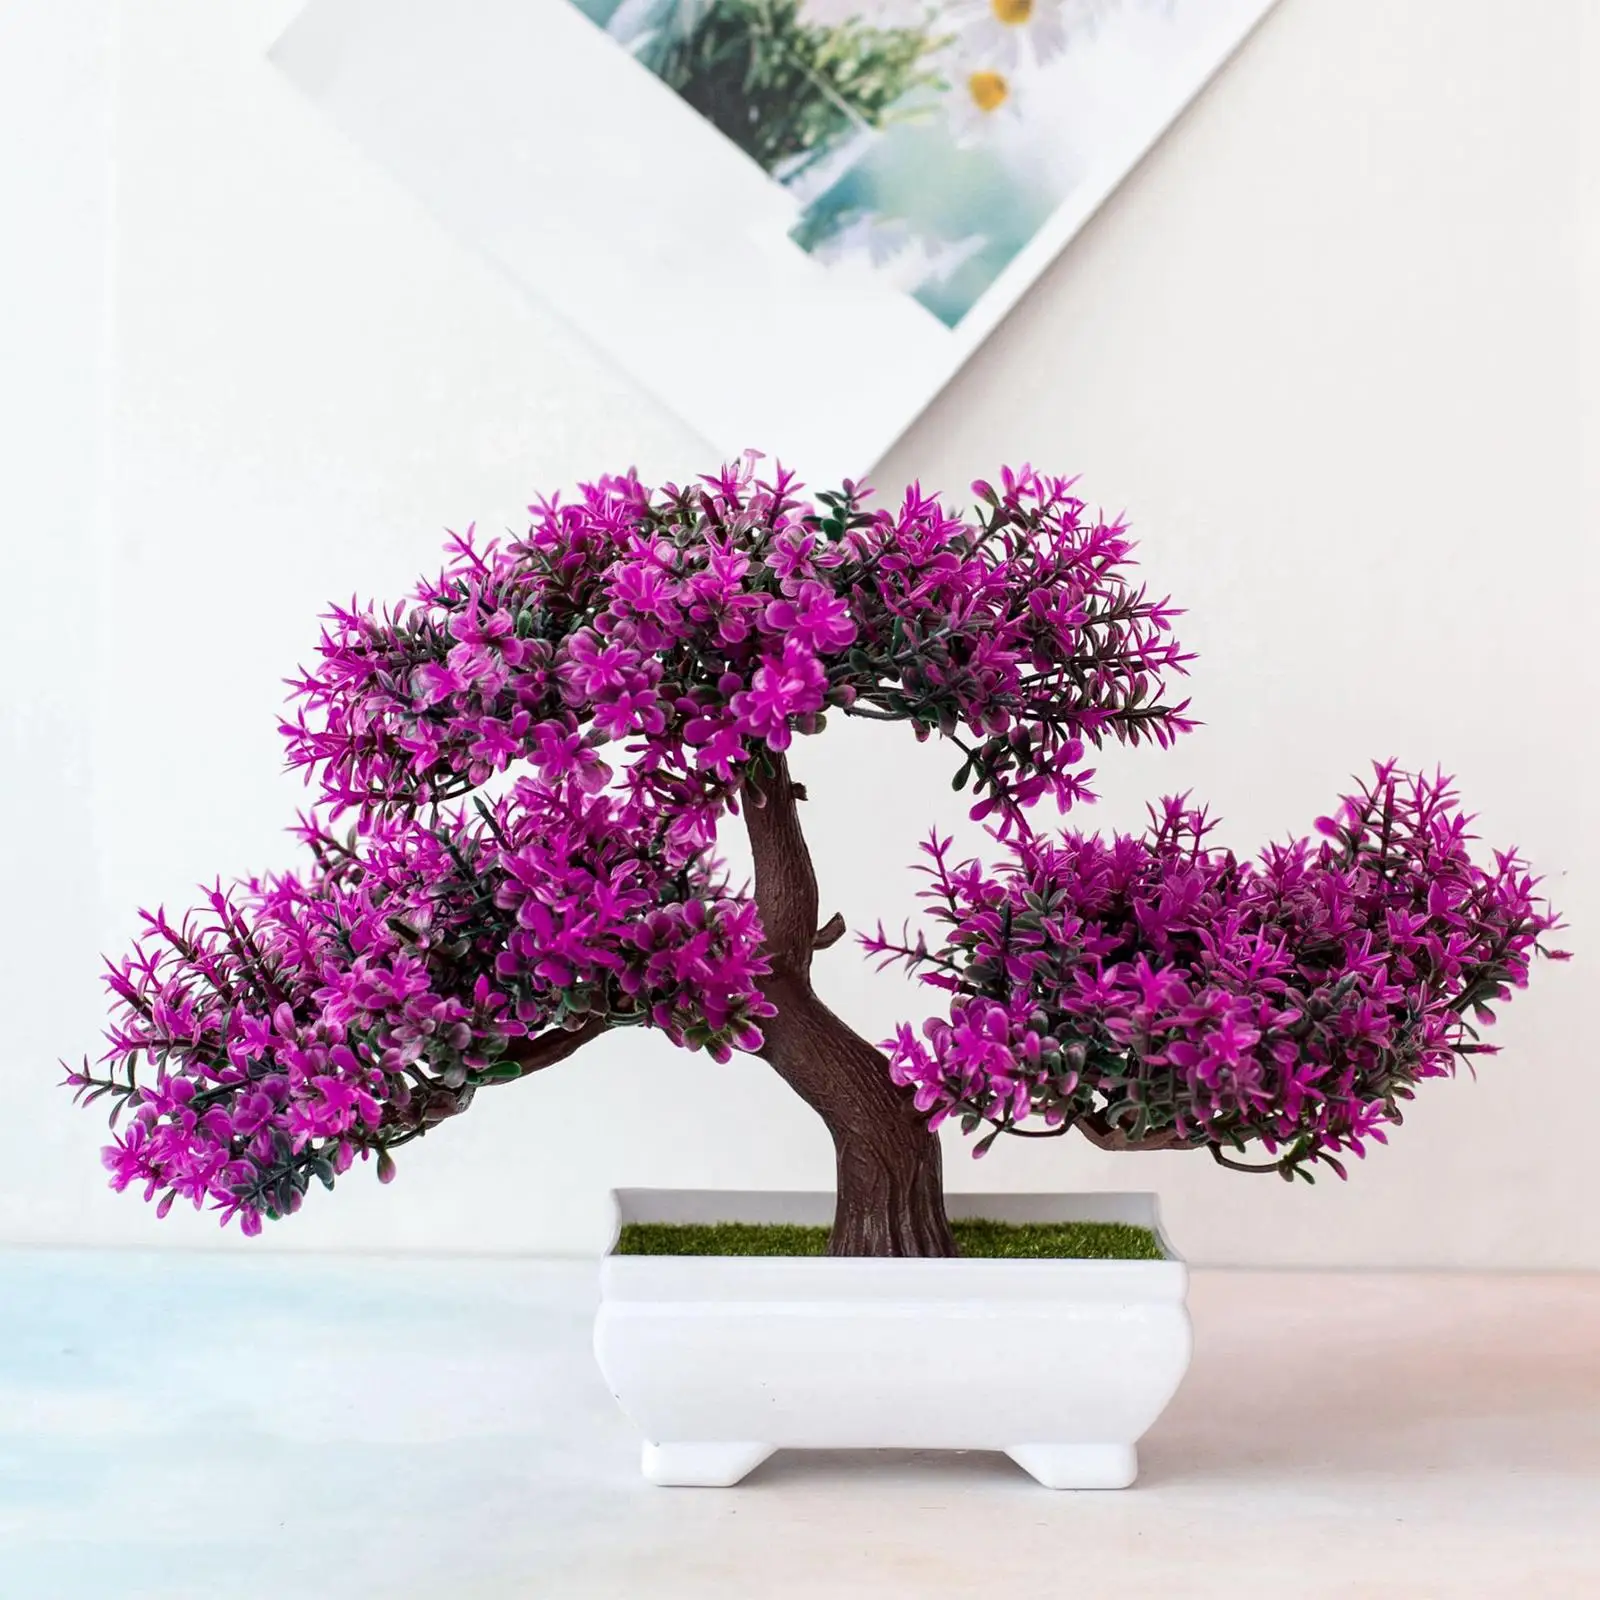 Artificial Bonsai Tree,Fake Plant Decoration,Potted Artificial House Plants, Japanese Pine for Desktop, Zen Garden, Home Decor